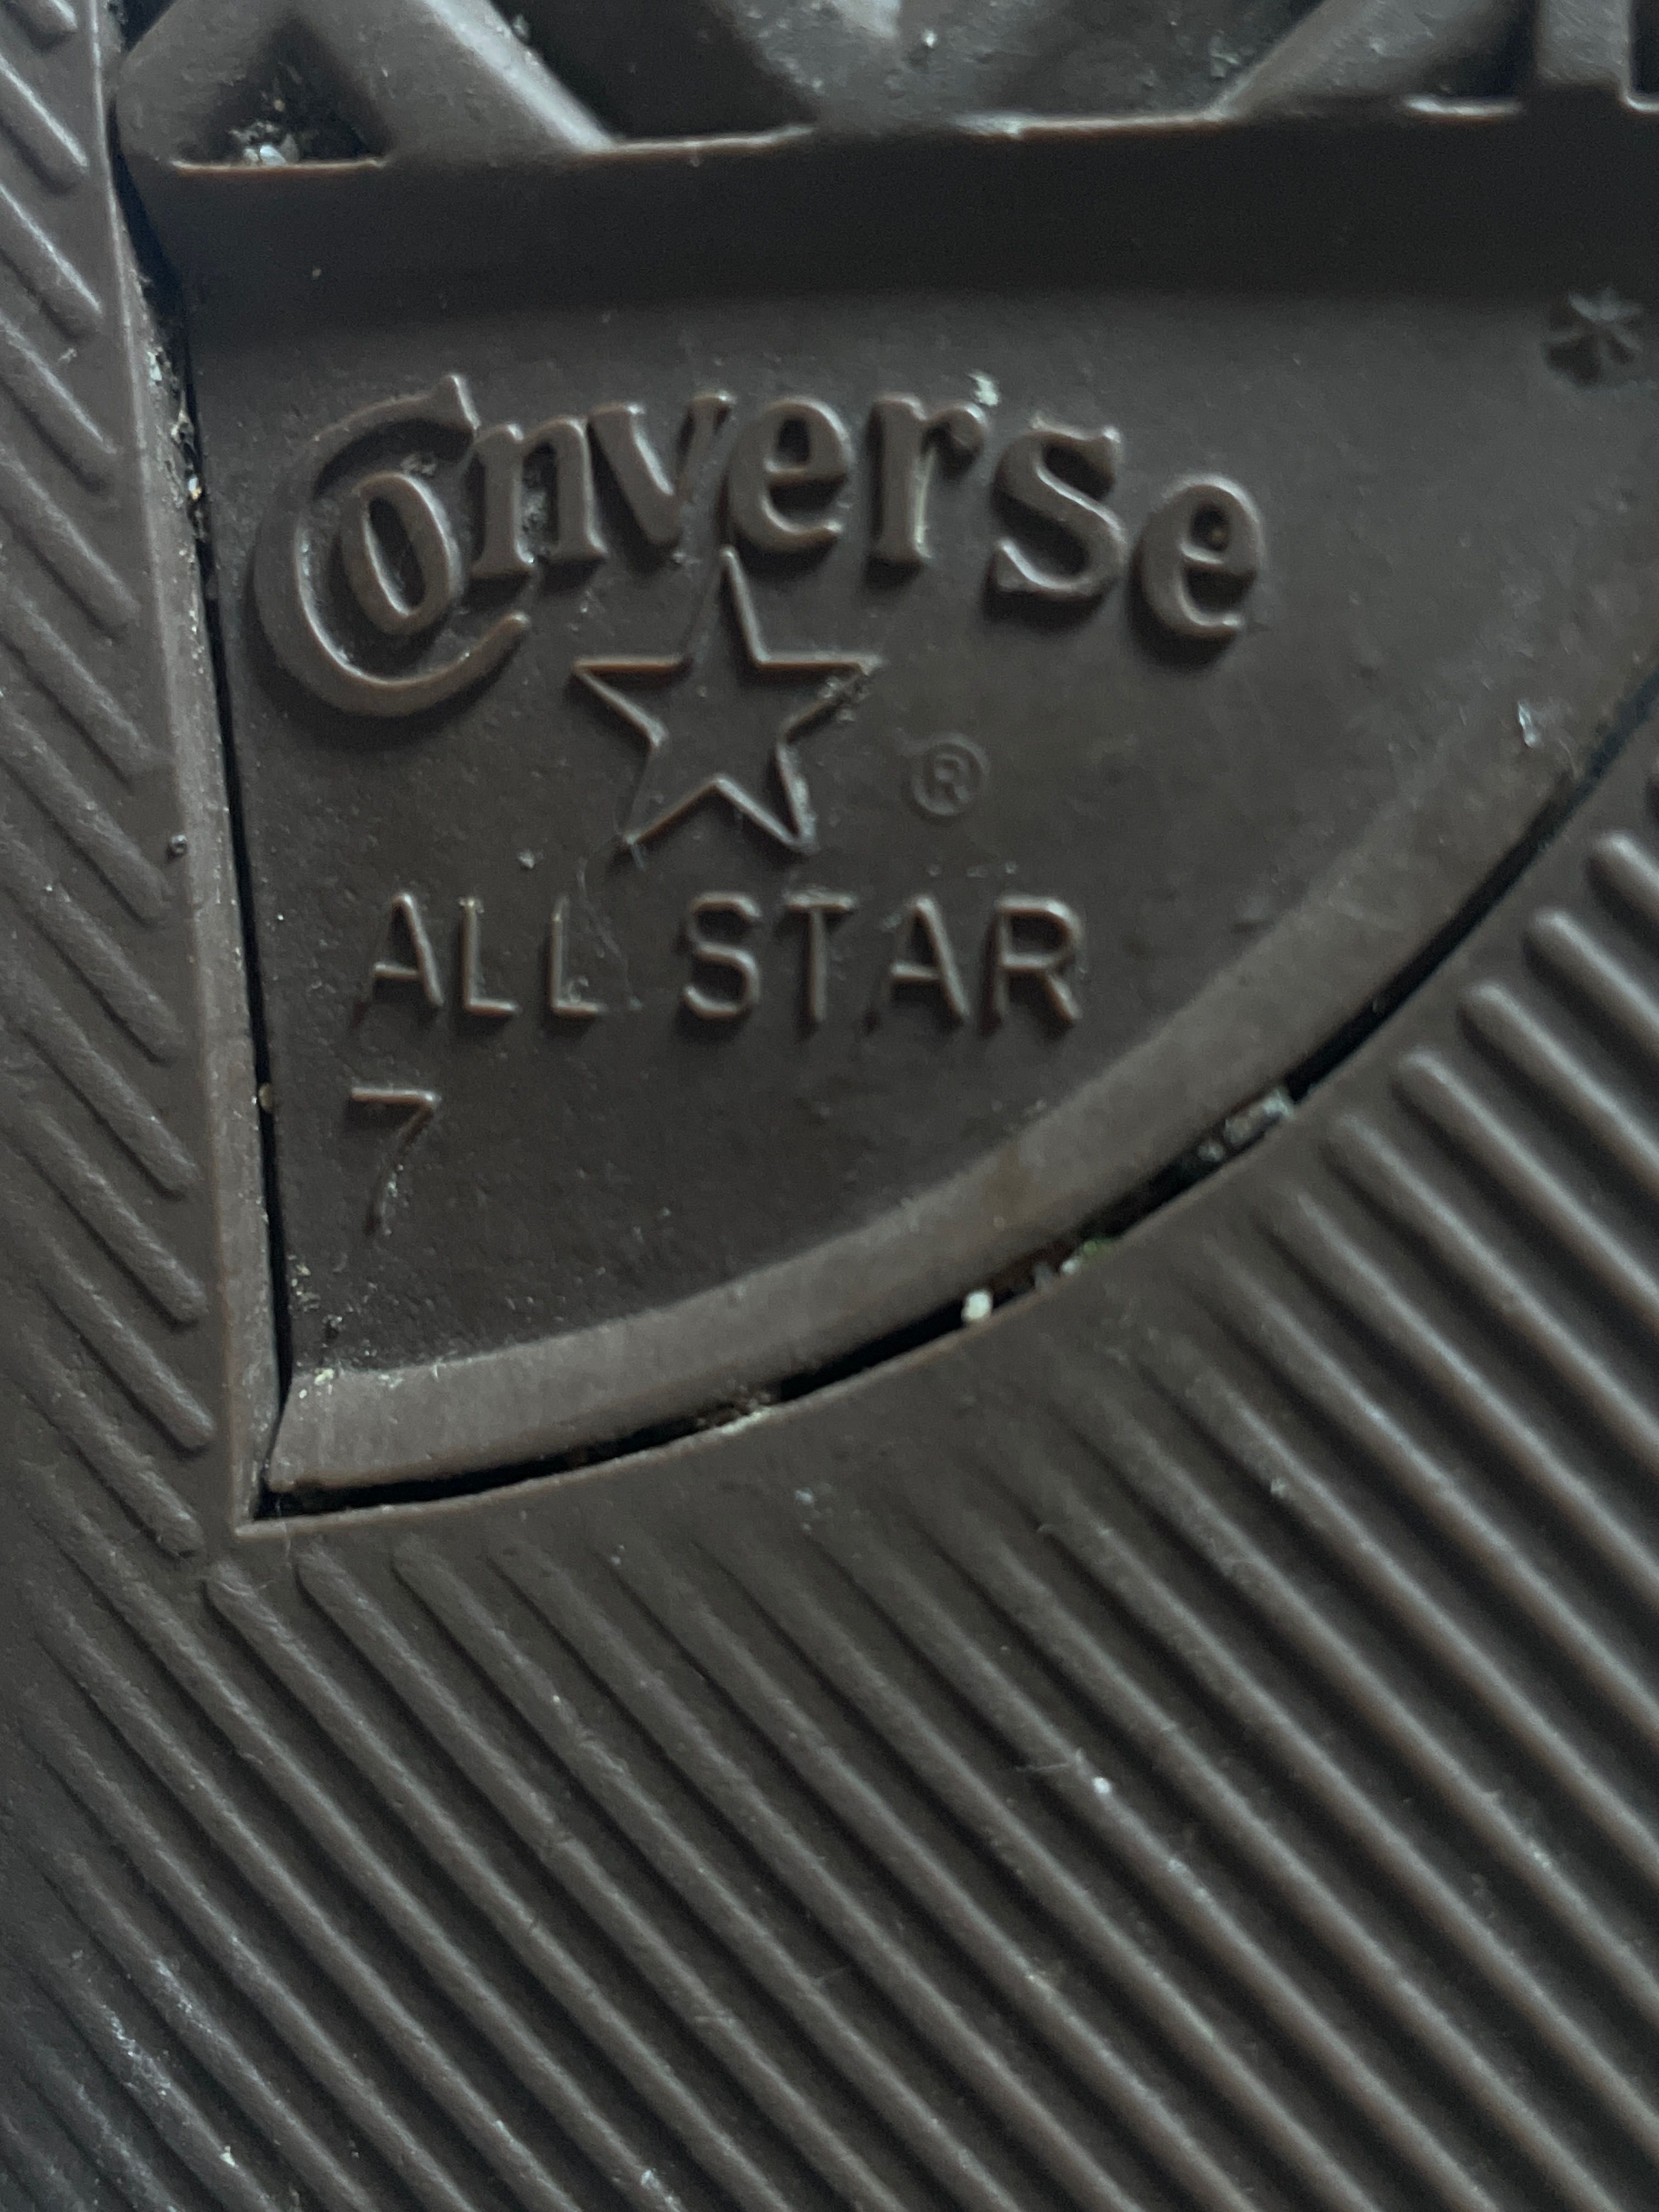 Converse All Star Unisex